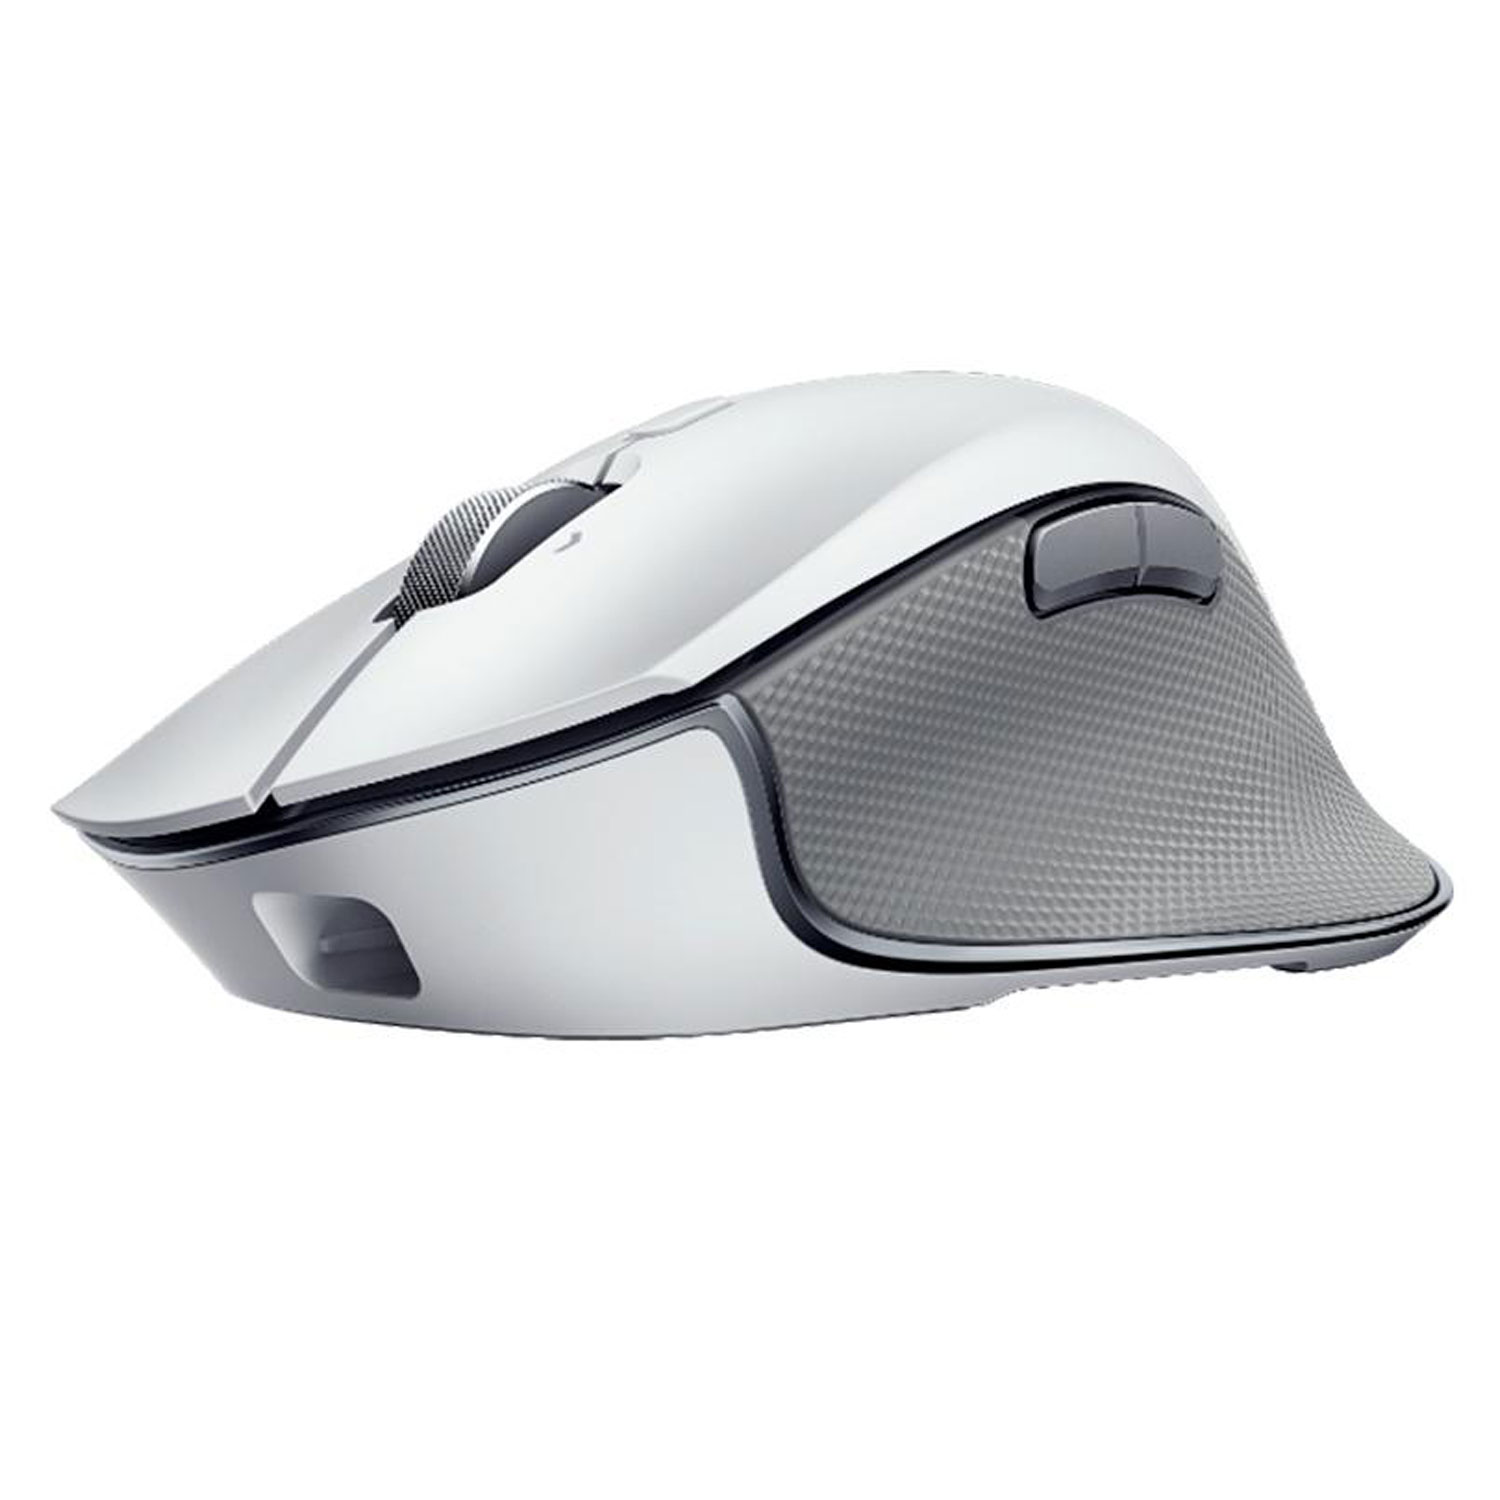 Mouse Razer Pro Click RZ01-02990100-R3U1